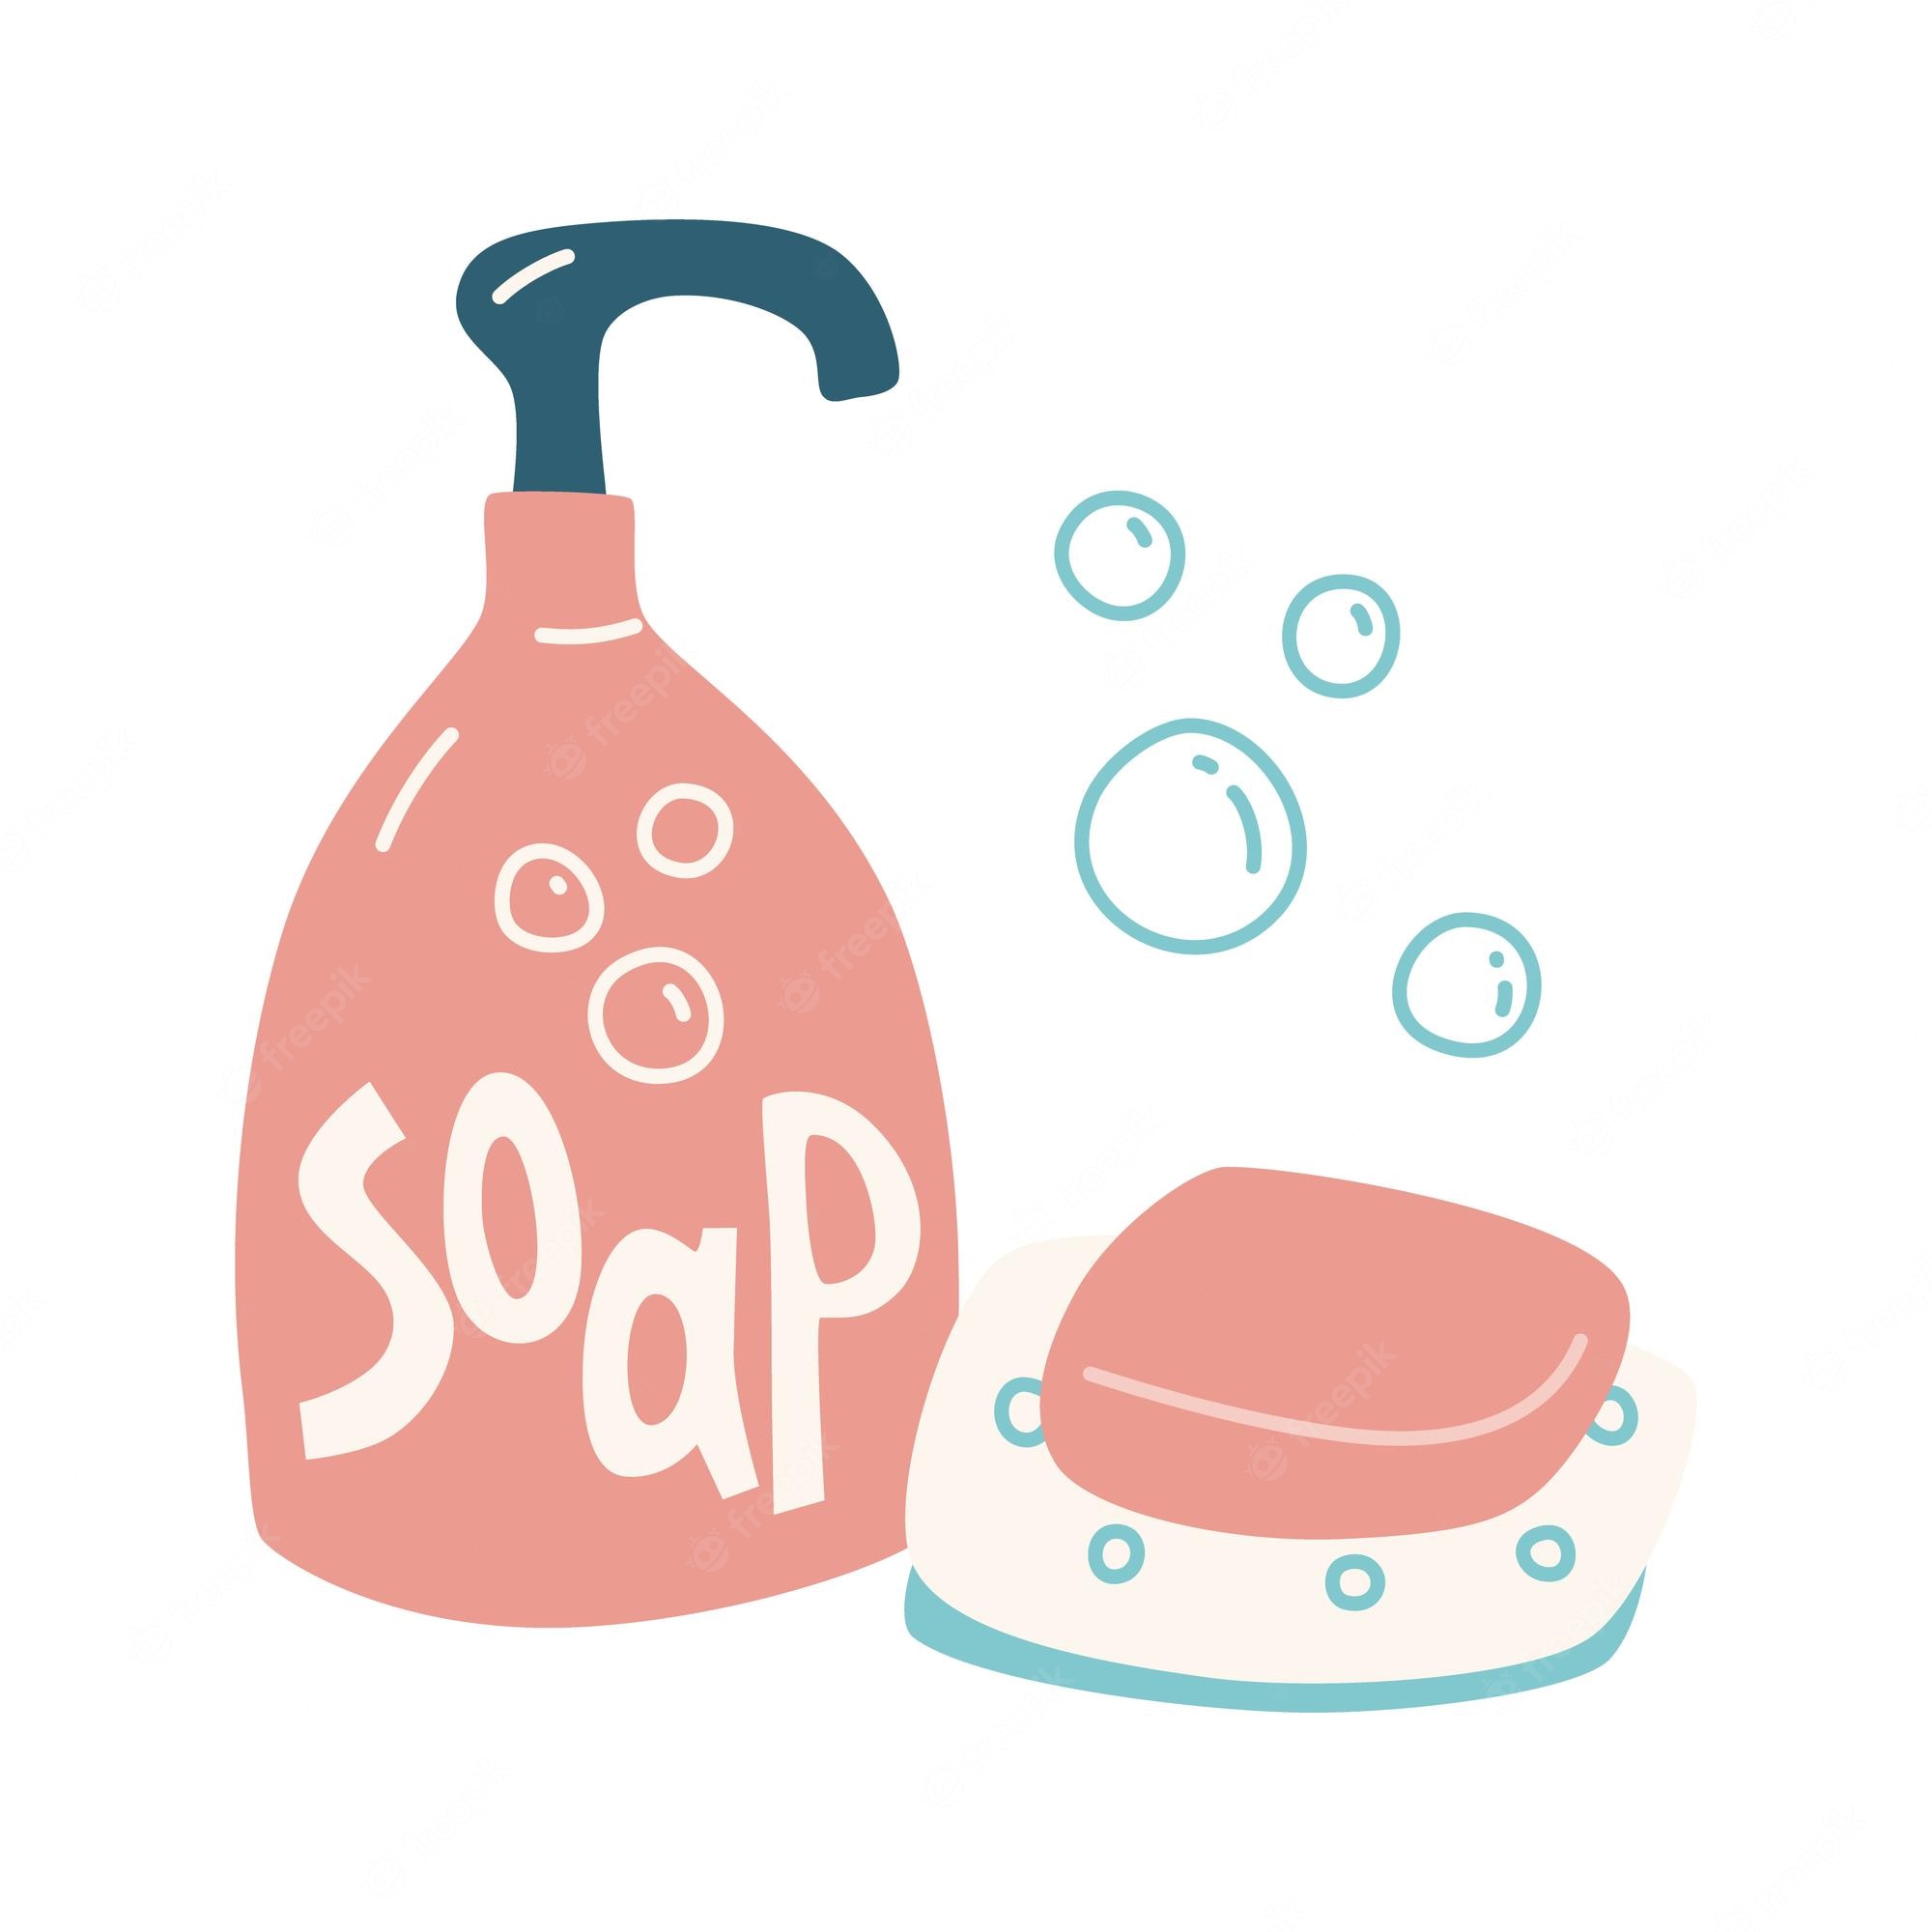 soap-clip-art-cartoon-royalty-free-vector-image-clip-art-library